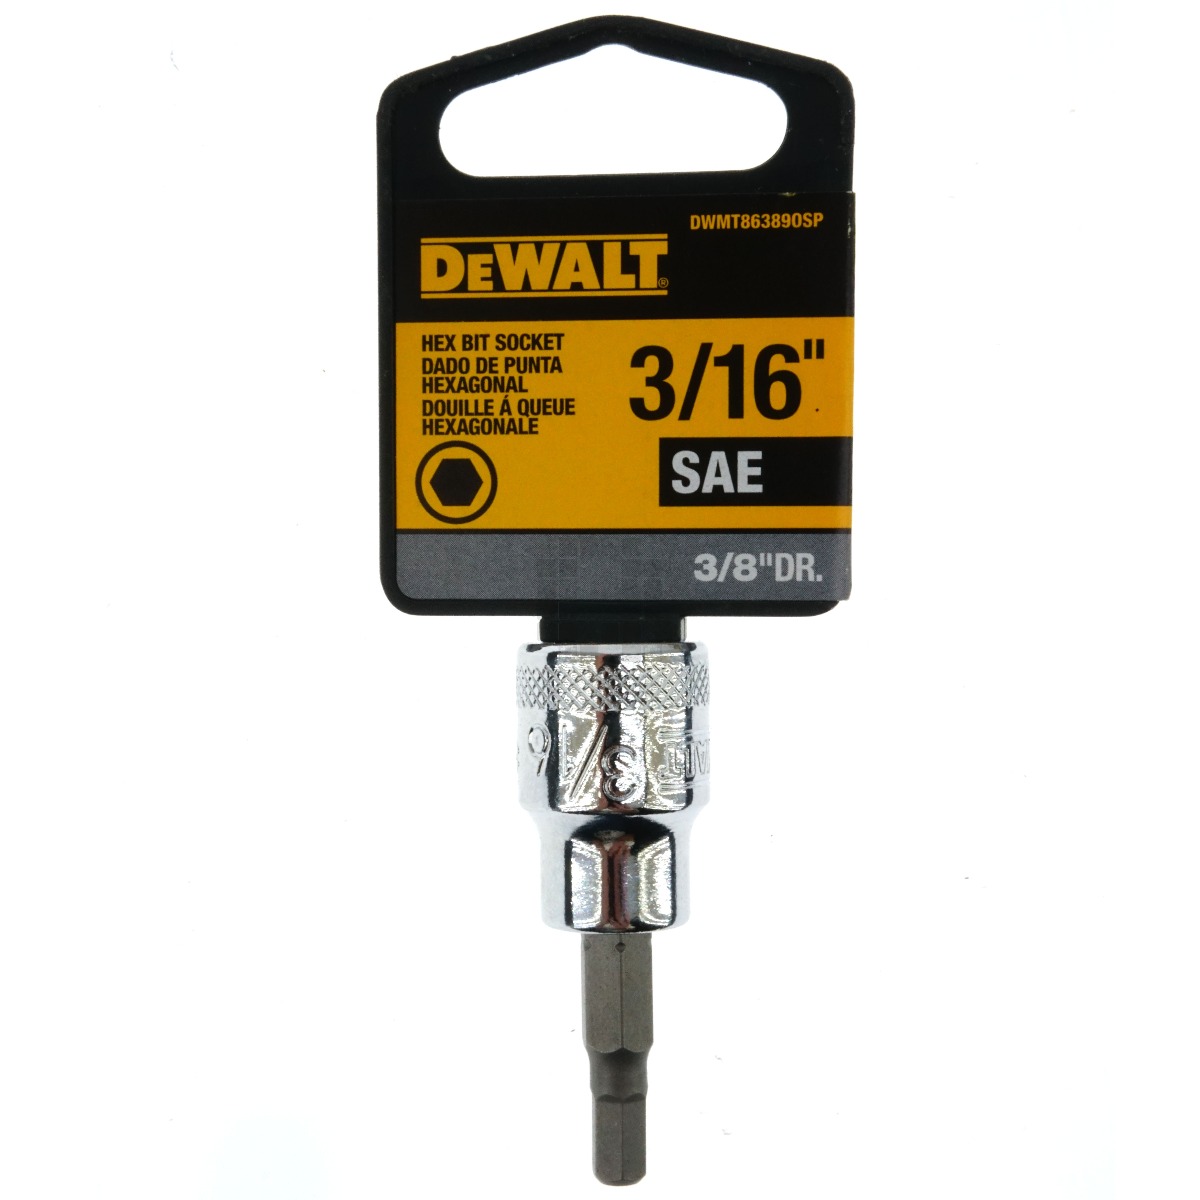 Dewalt DWMT86389OSP 3/16" SAE Chrome Hex Bit Socket, 3/8" Drive, 86-389D